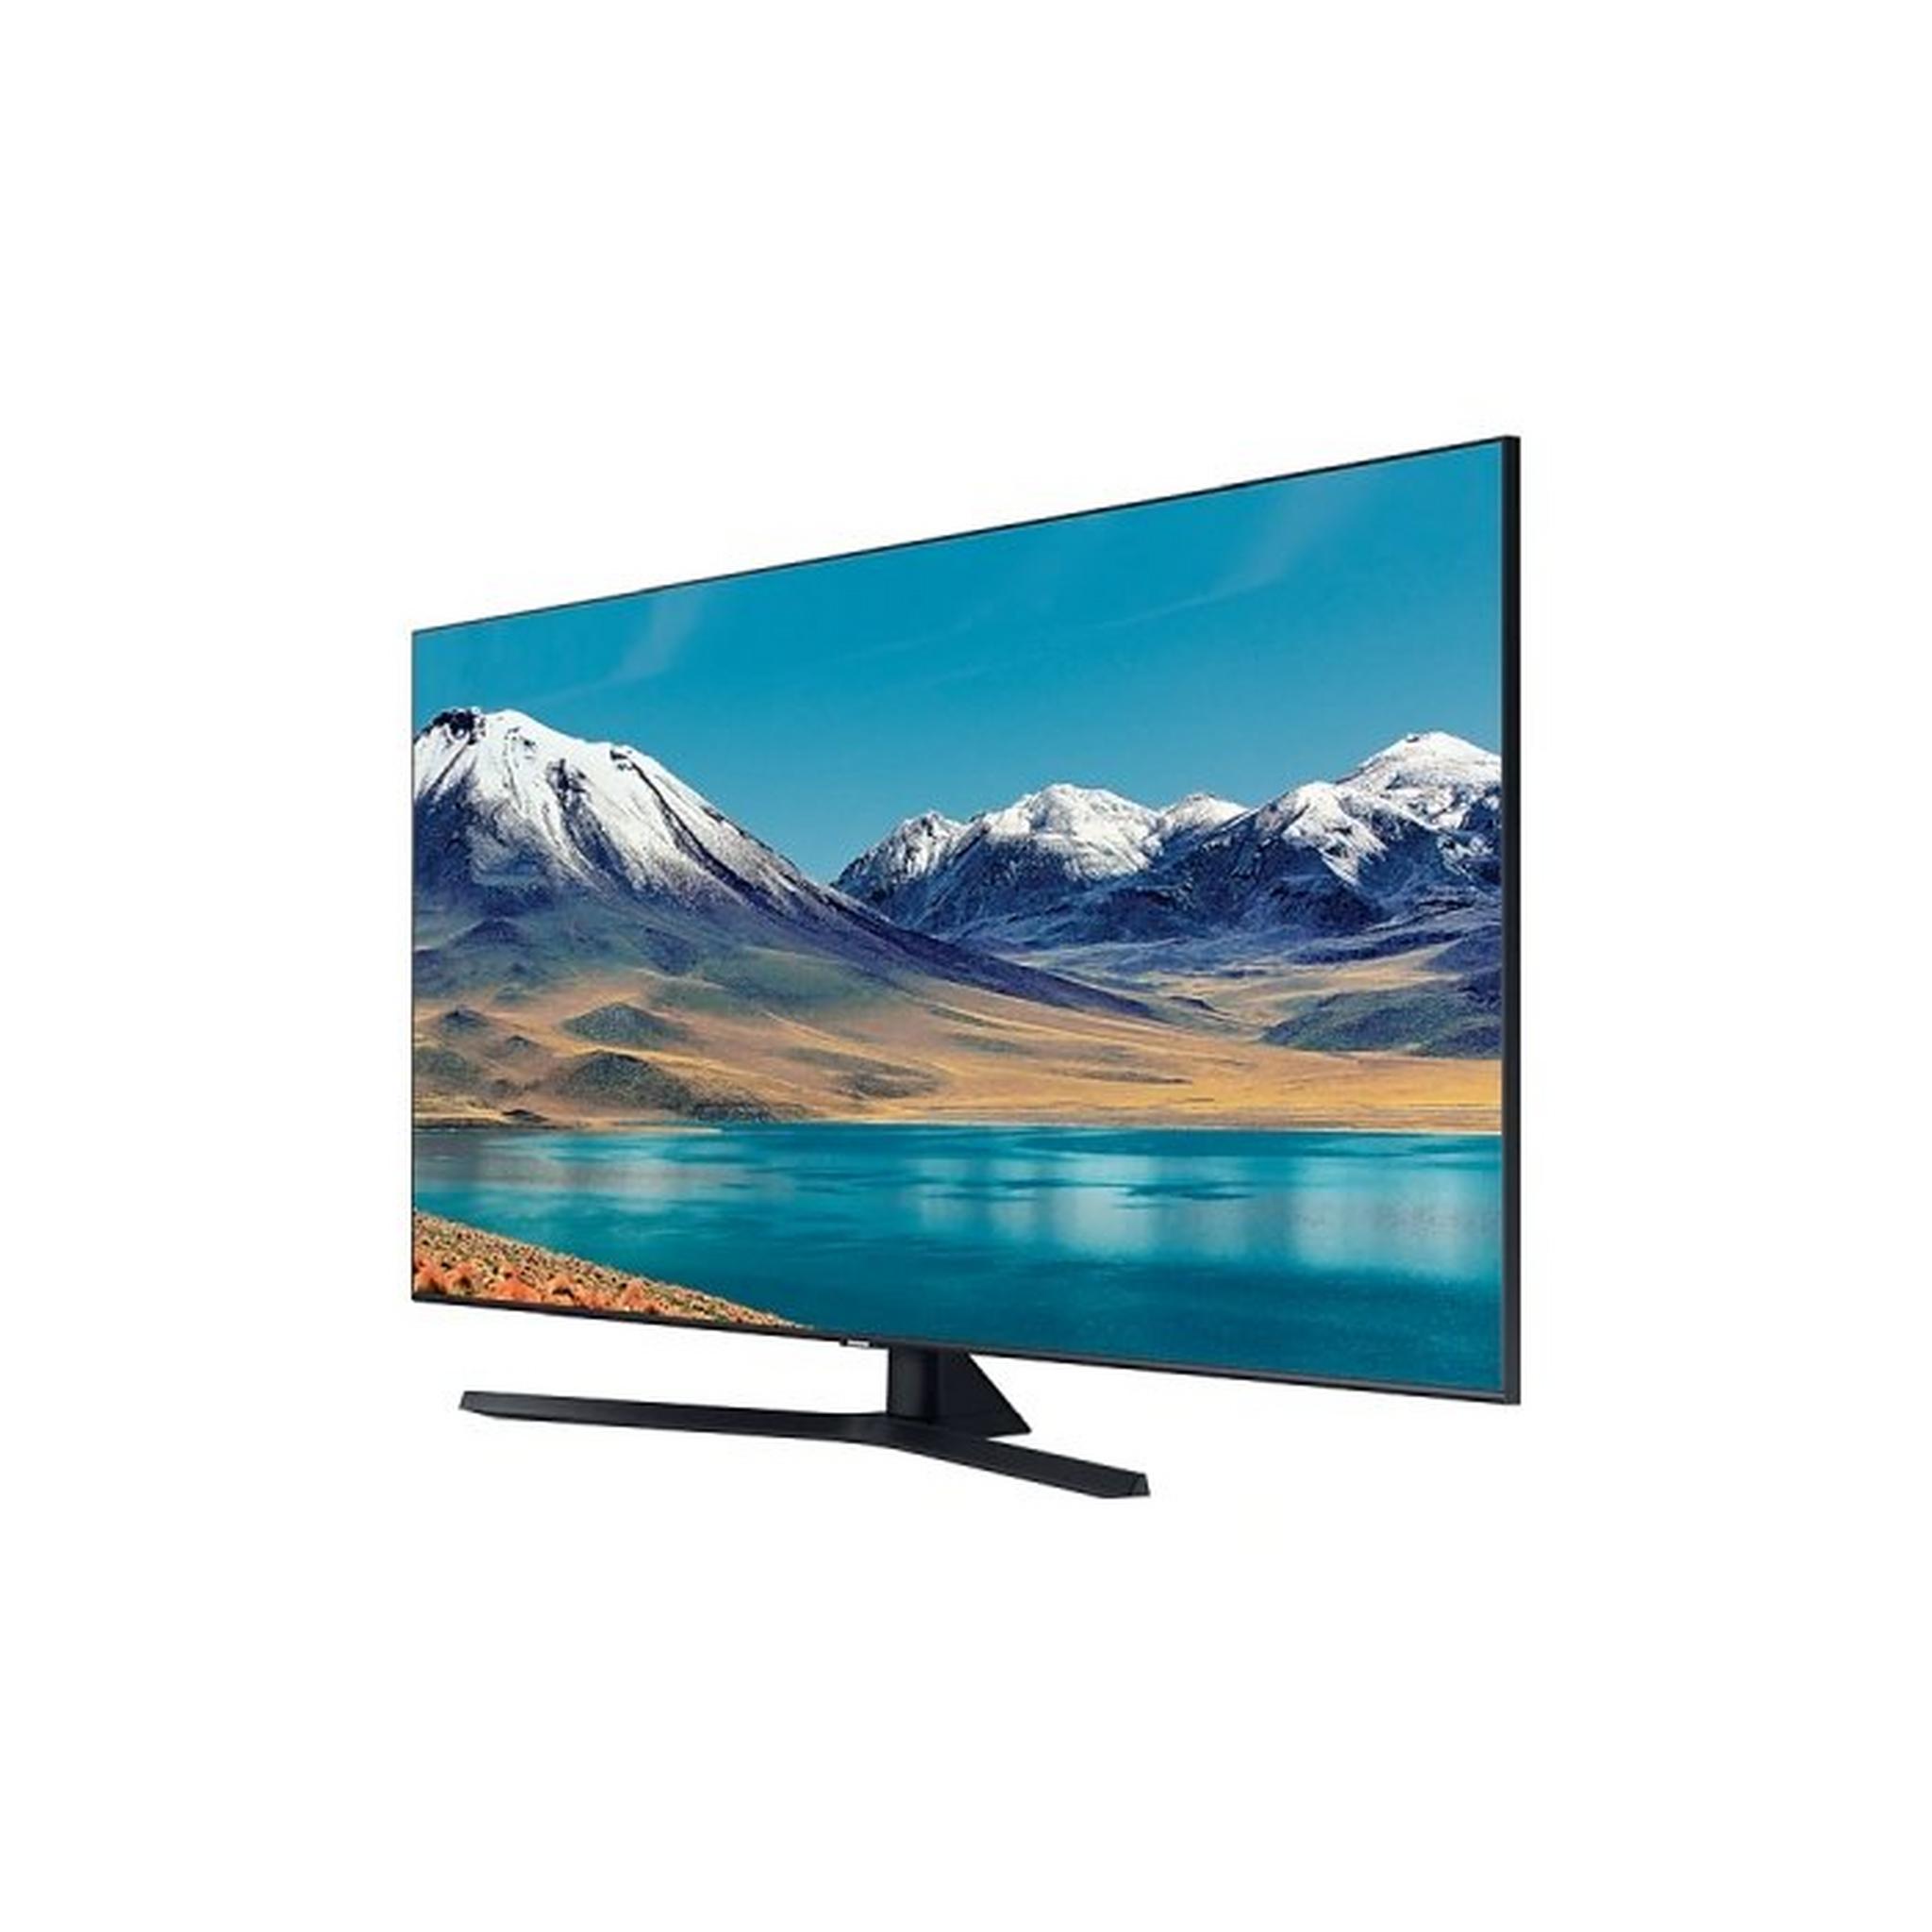 Samsung TV 65" UHD Smart LED (UA65TU8500)